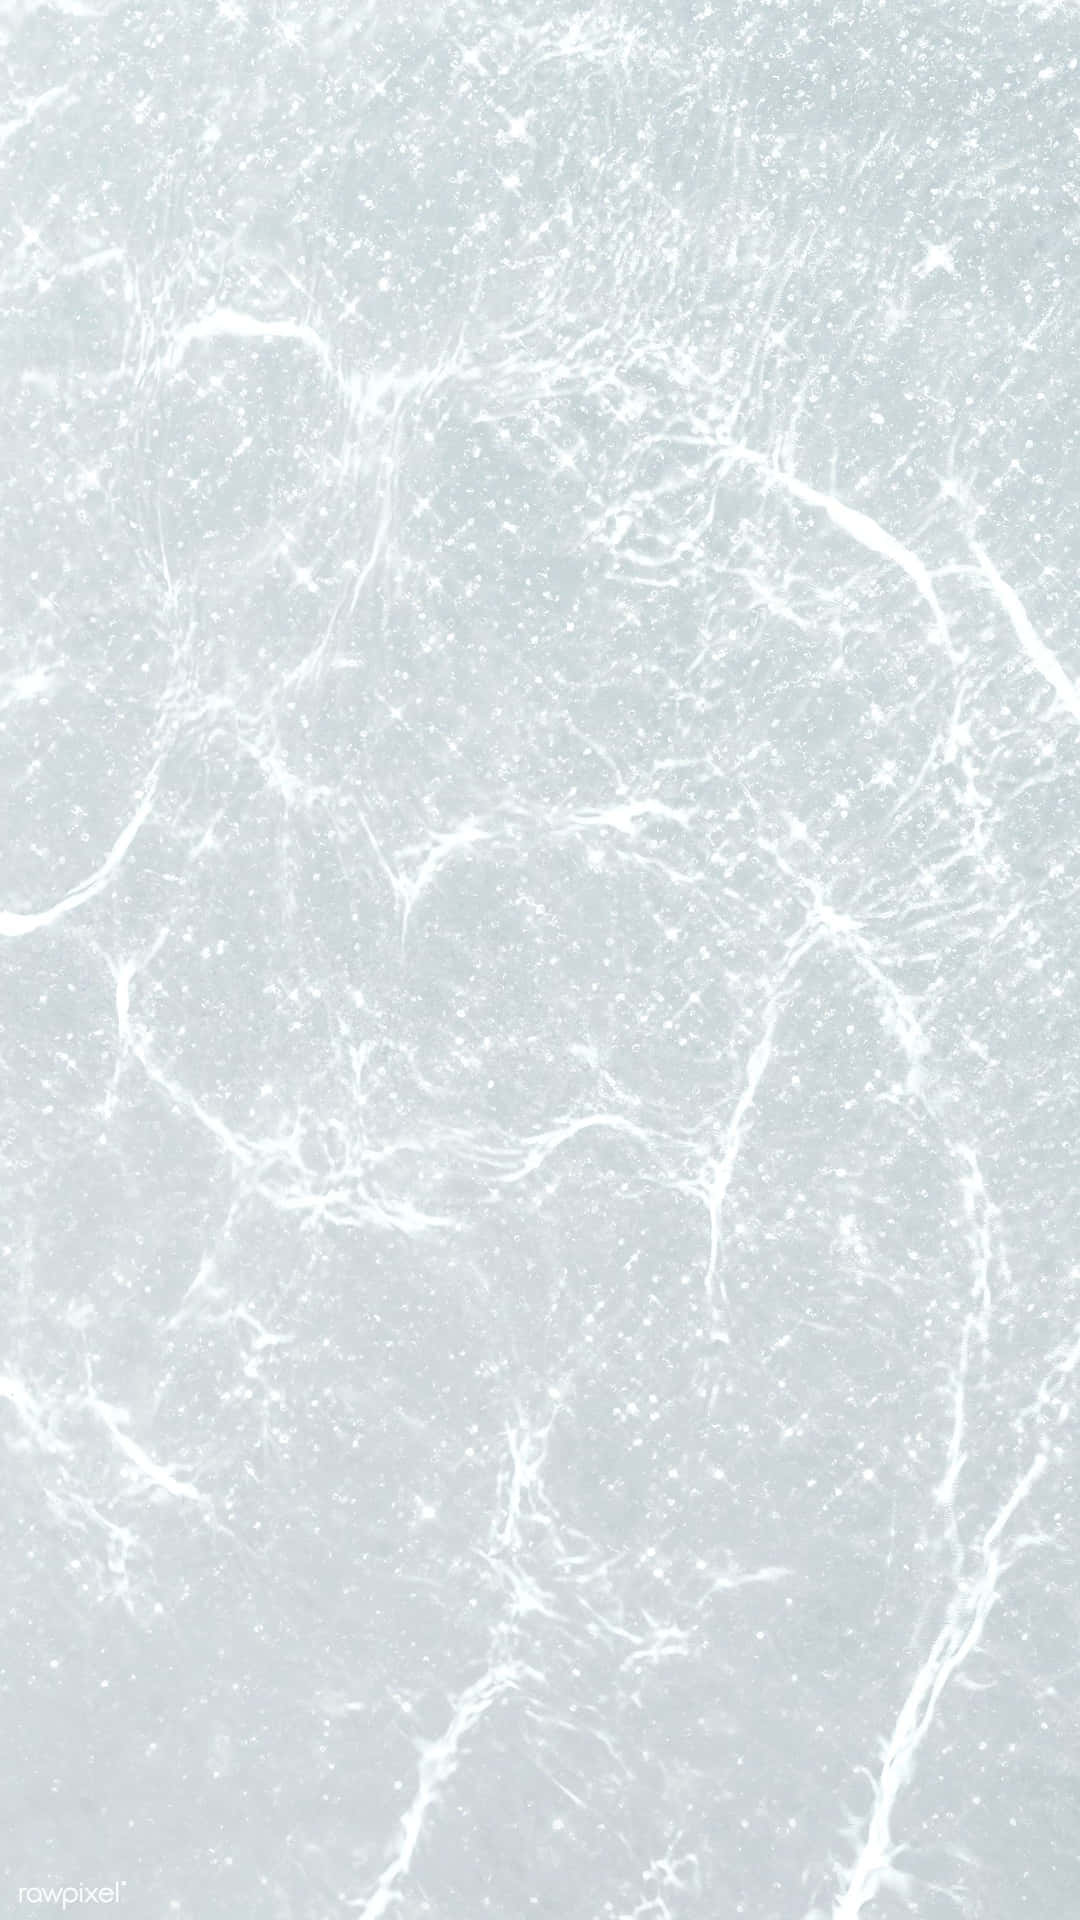 A Close Up View Of An Elegant Light Gray Iphone Wallpaper